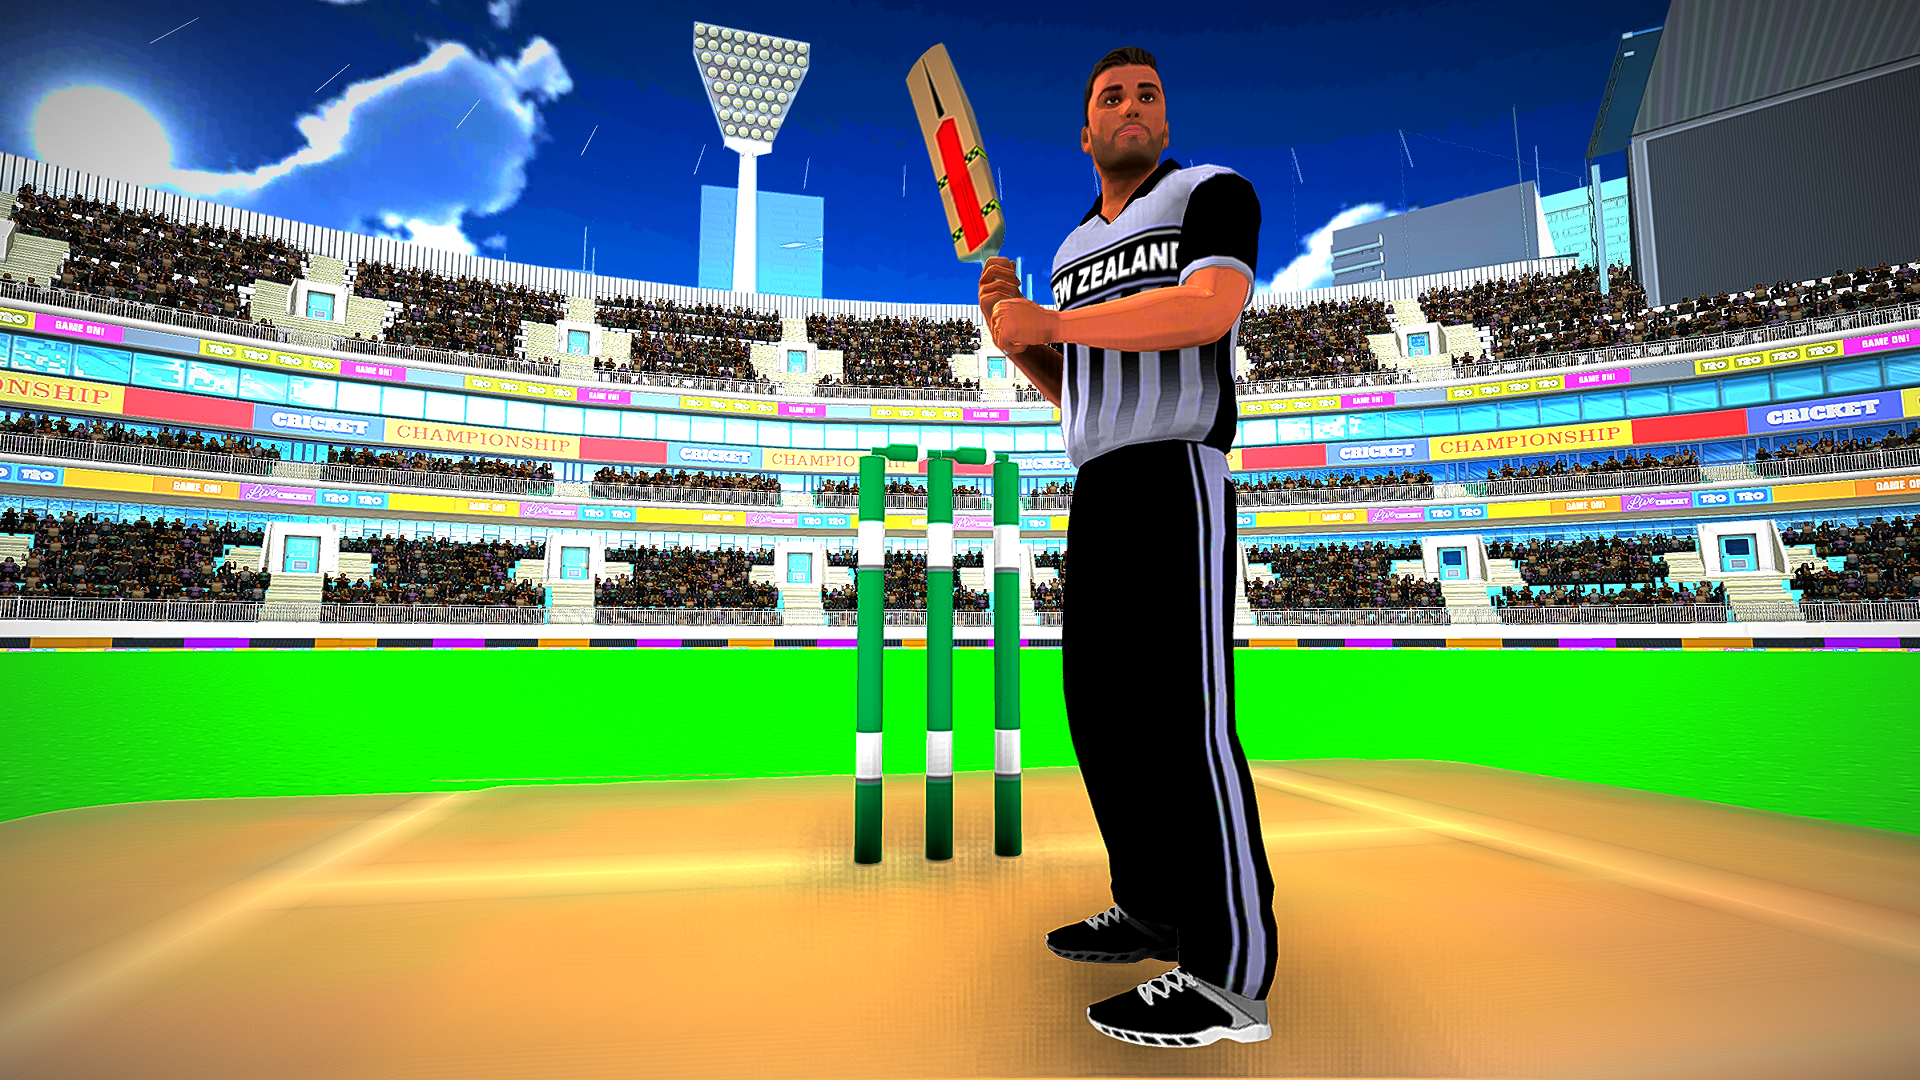 Screenshot of World Cup T20 Cricket Games